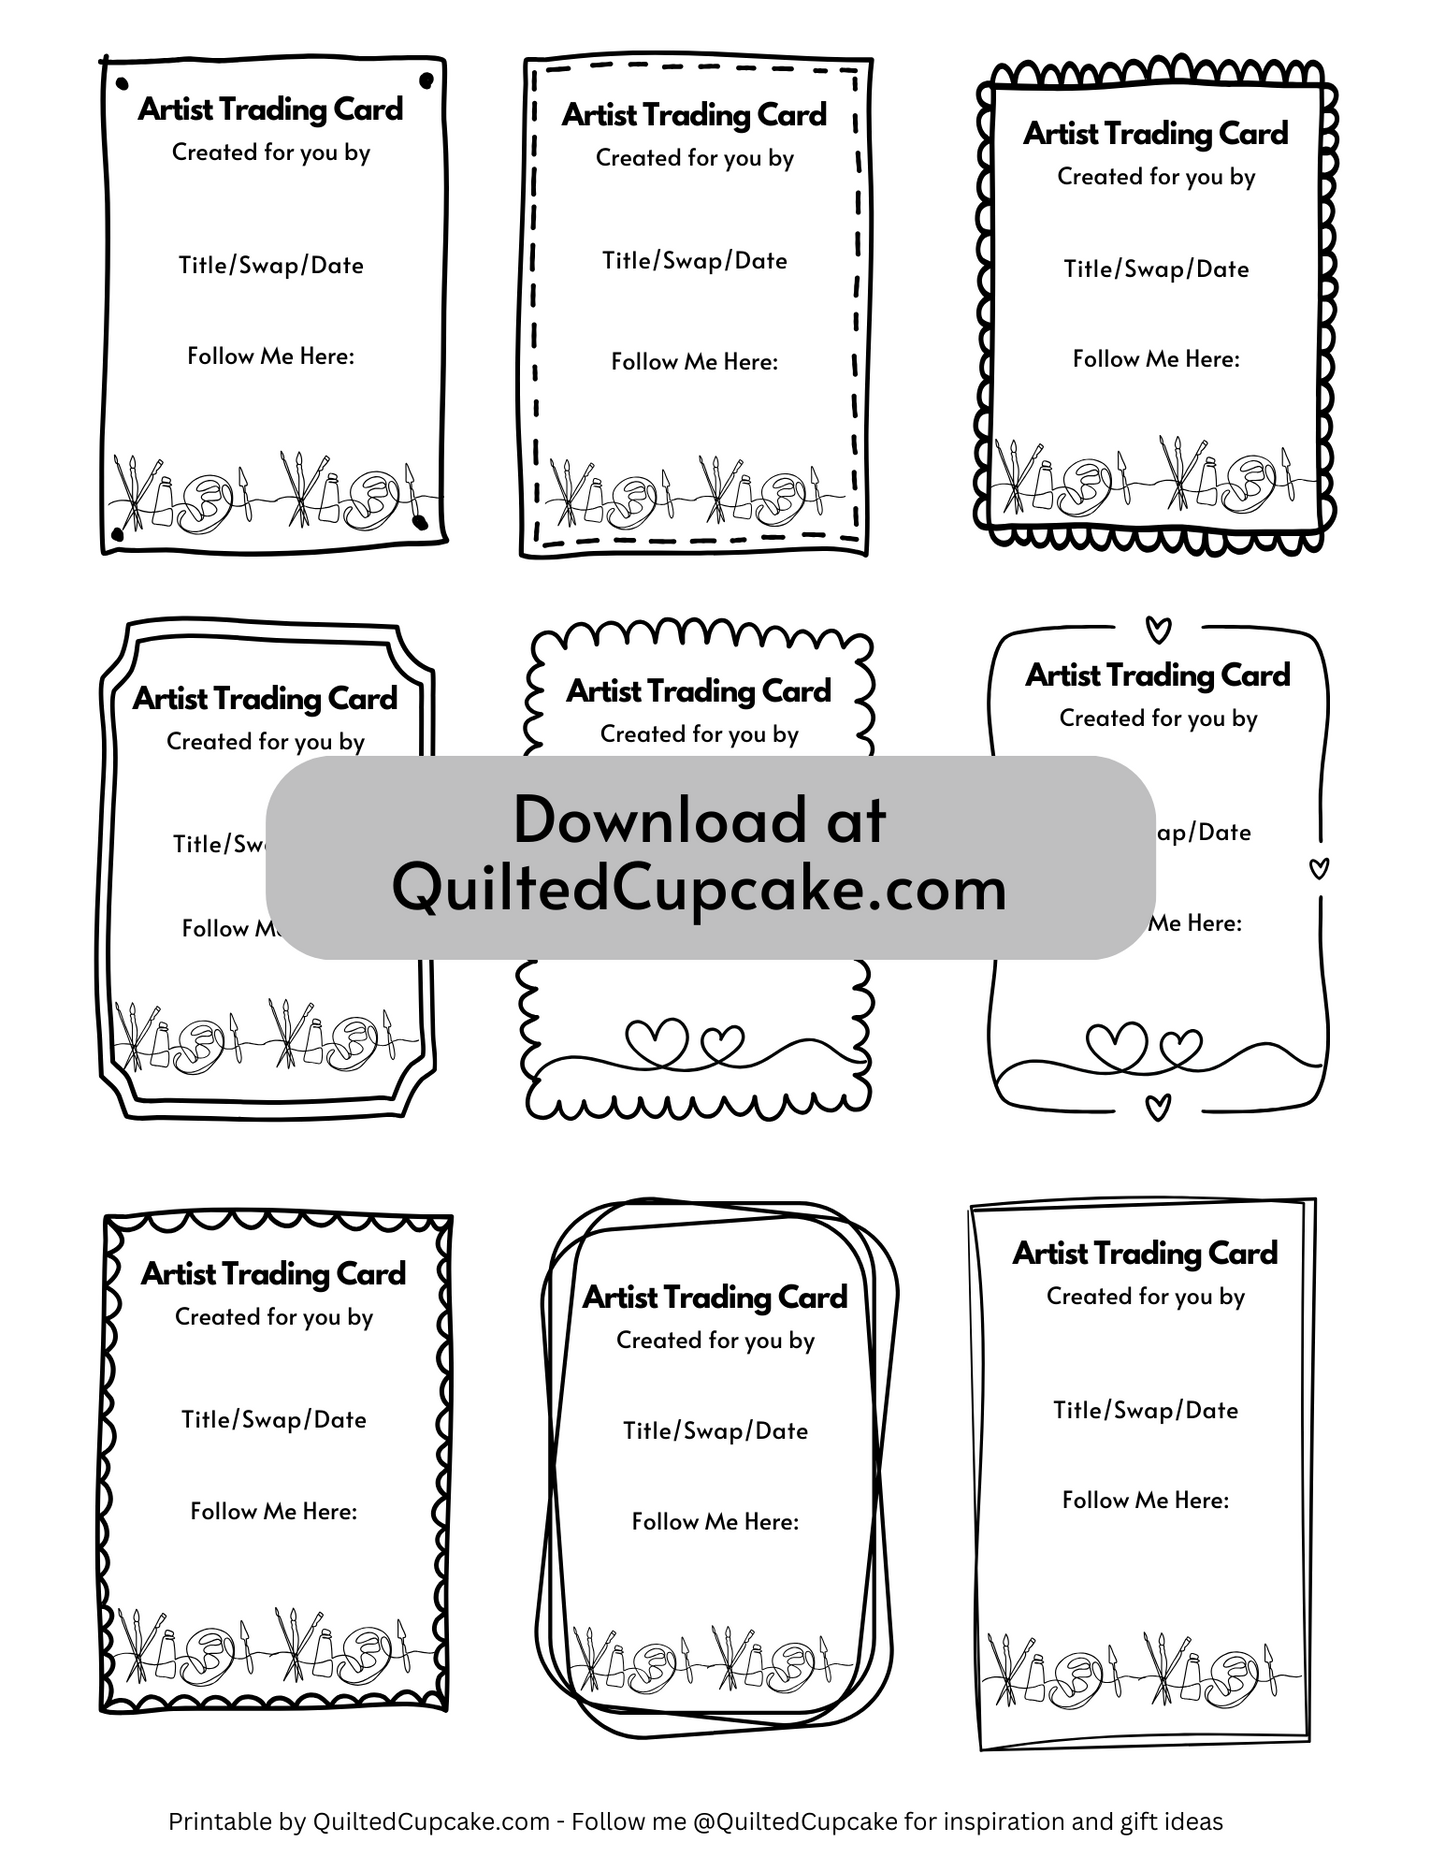 ATC Printable Labels by QuitledCupcake.com